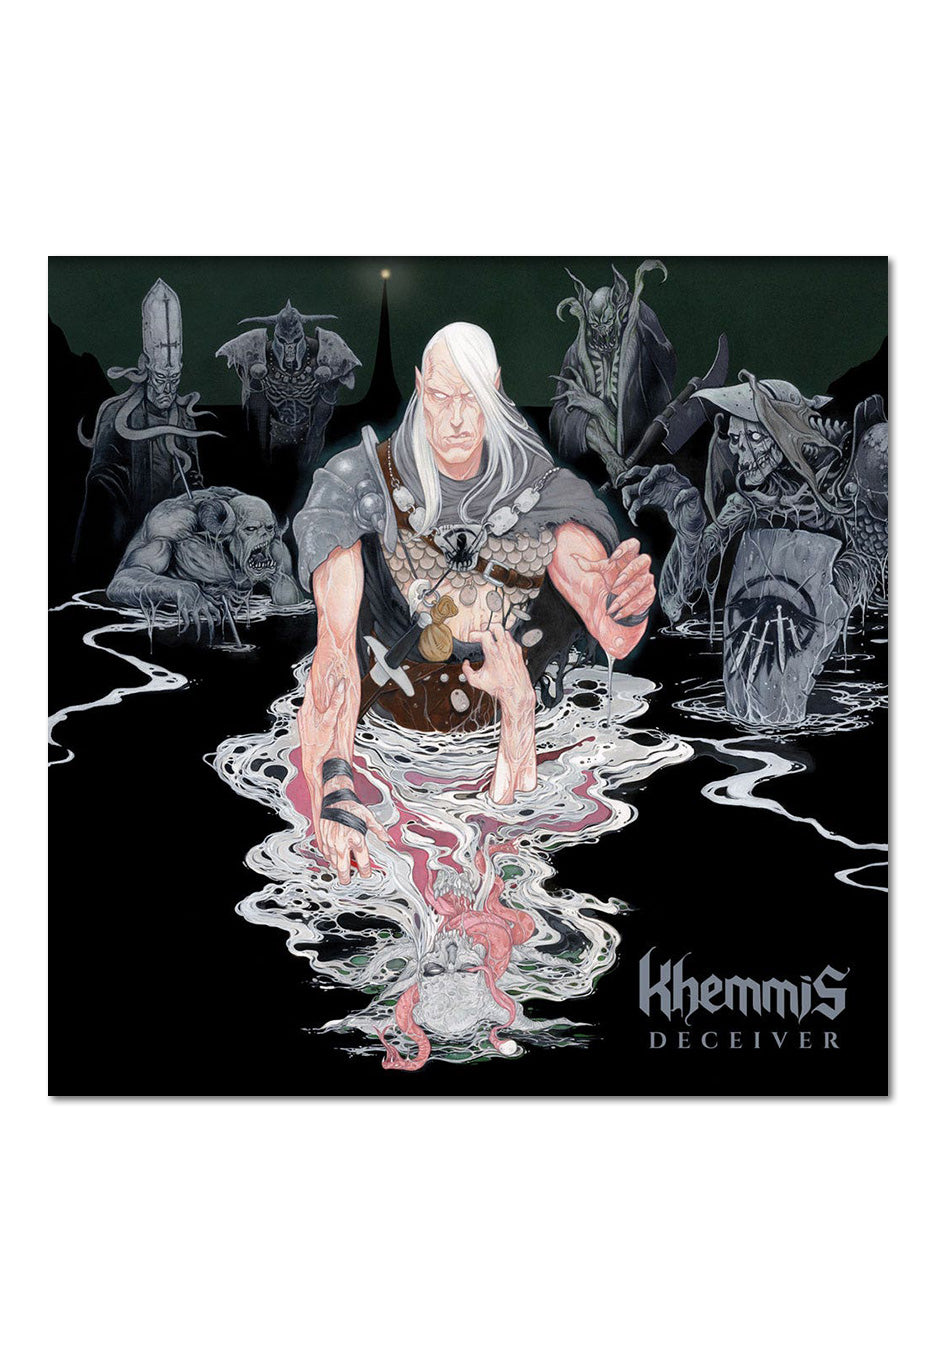 Khemmis - Deceiver - CD